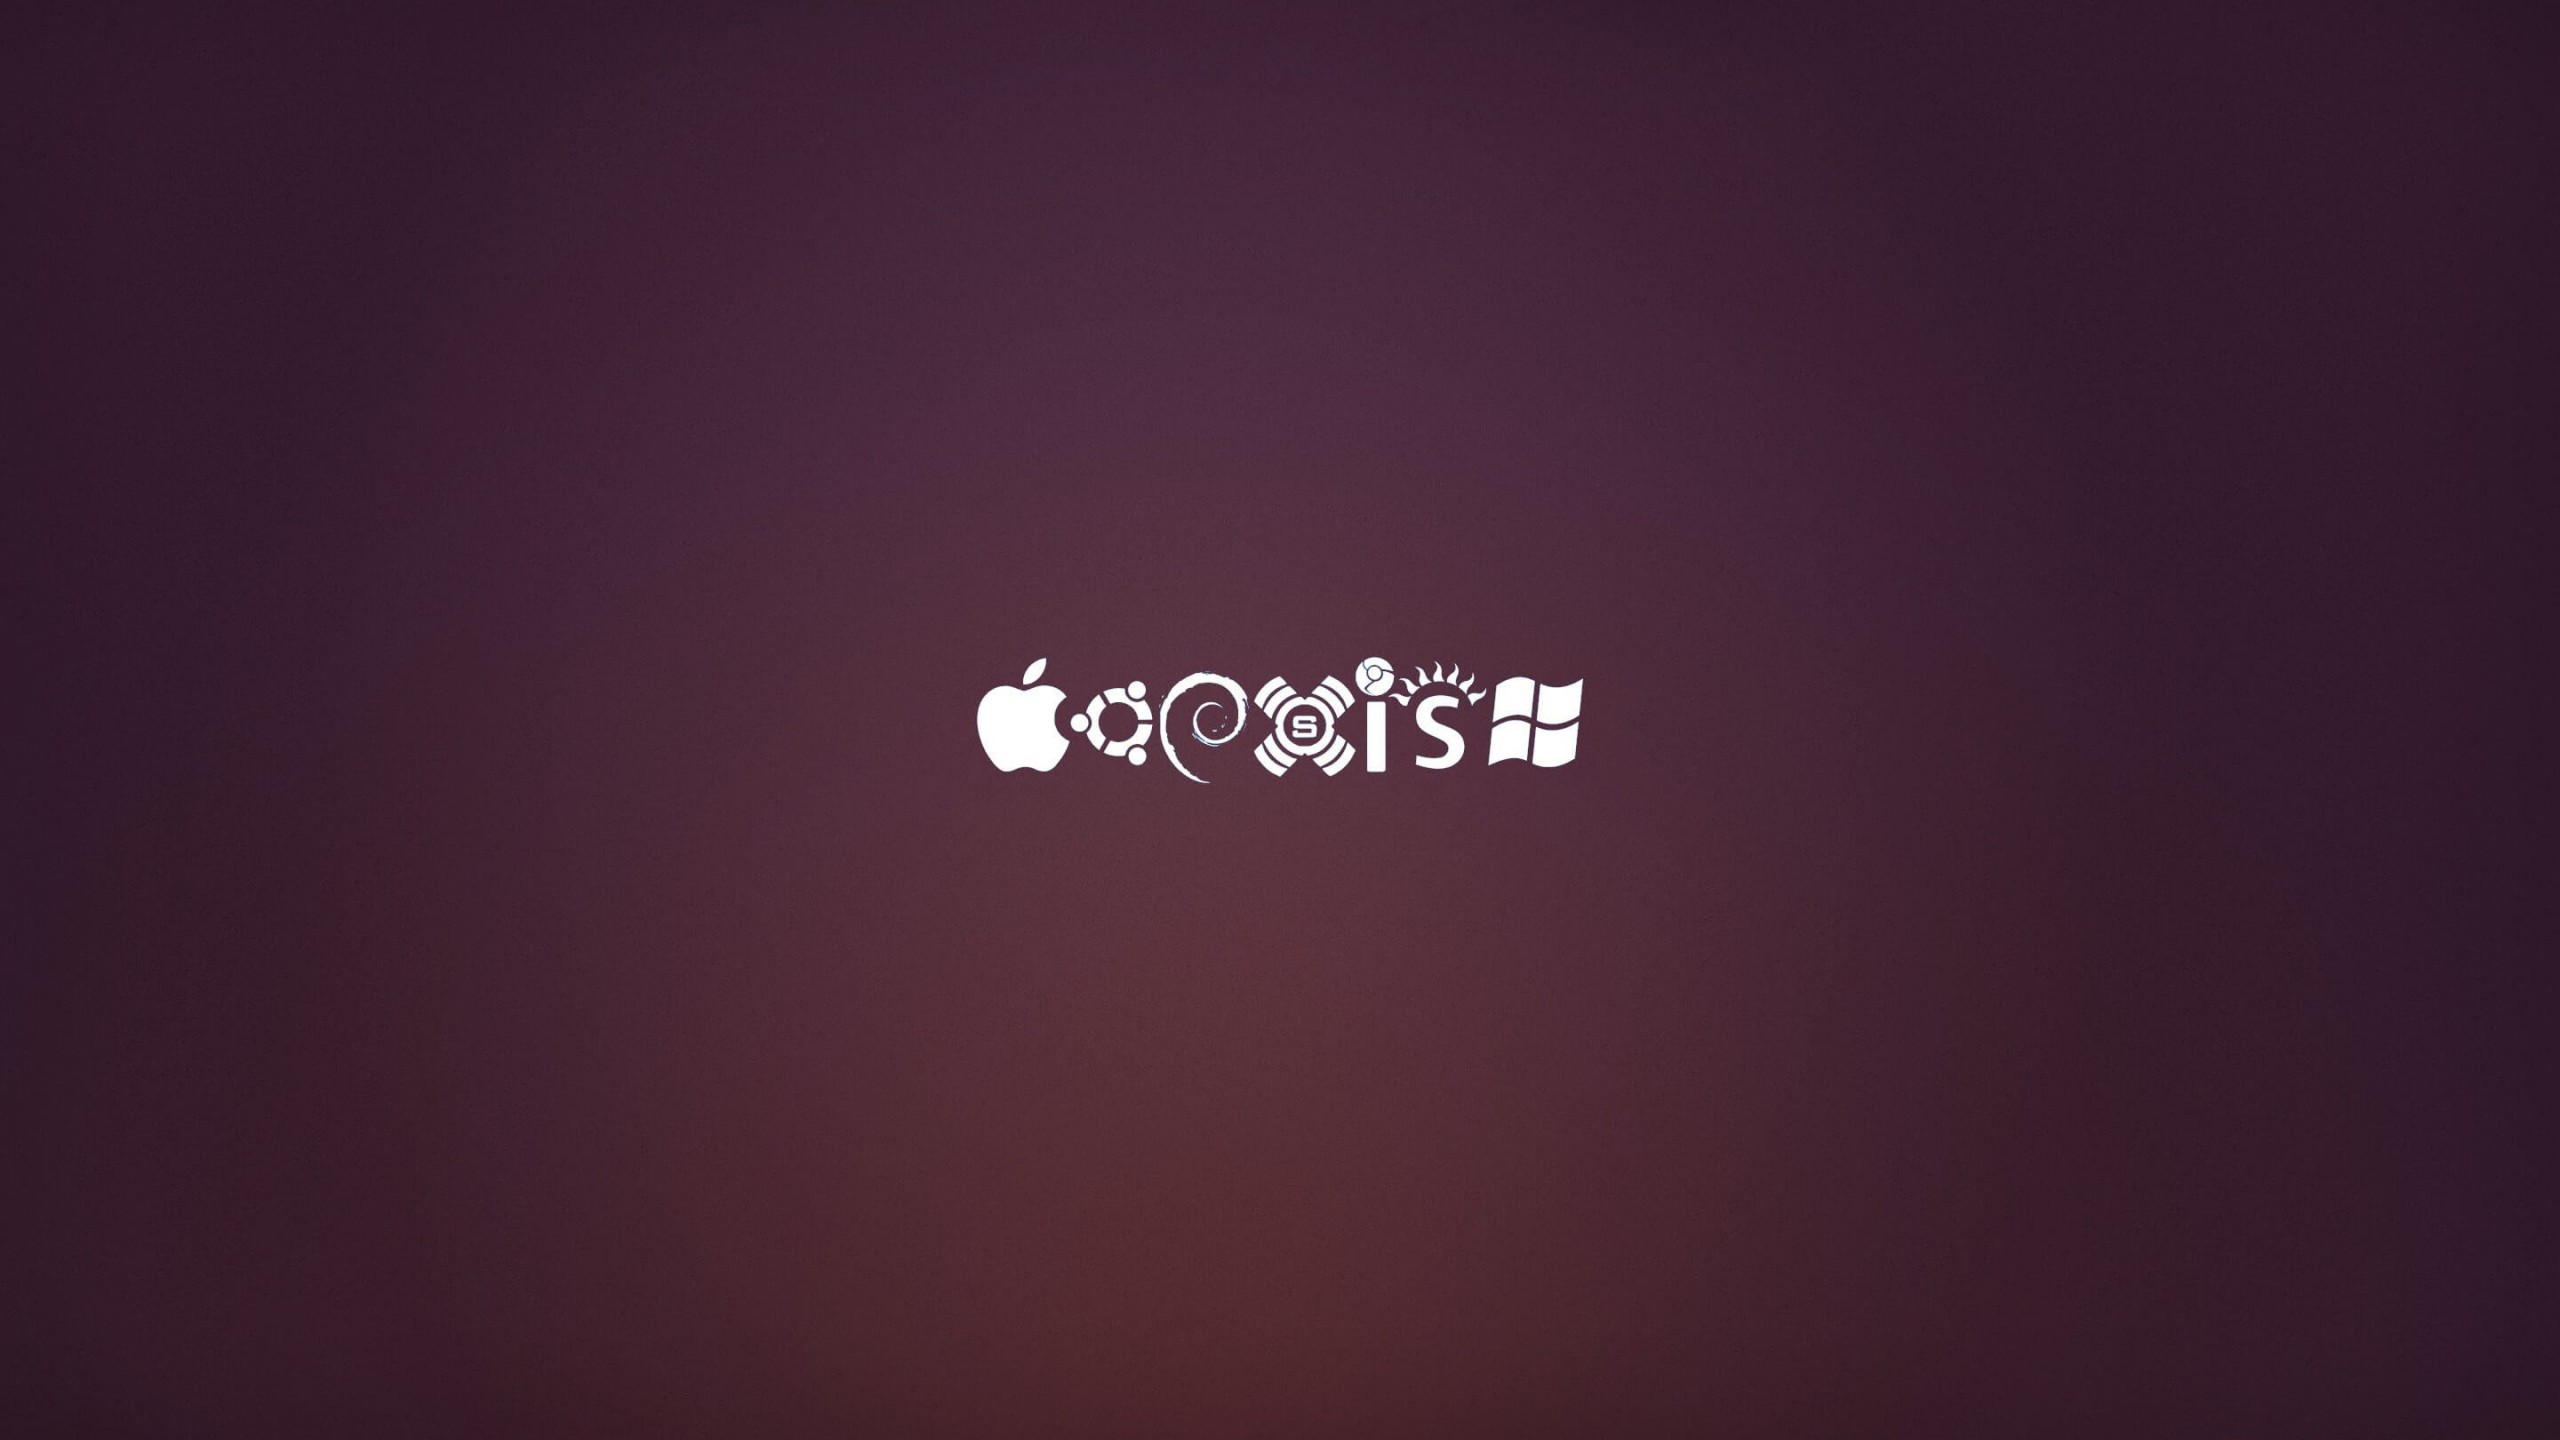 OS Coexist Wallpaper for Desktop 2560x1440